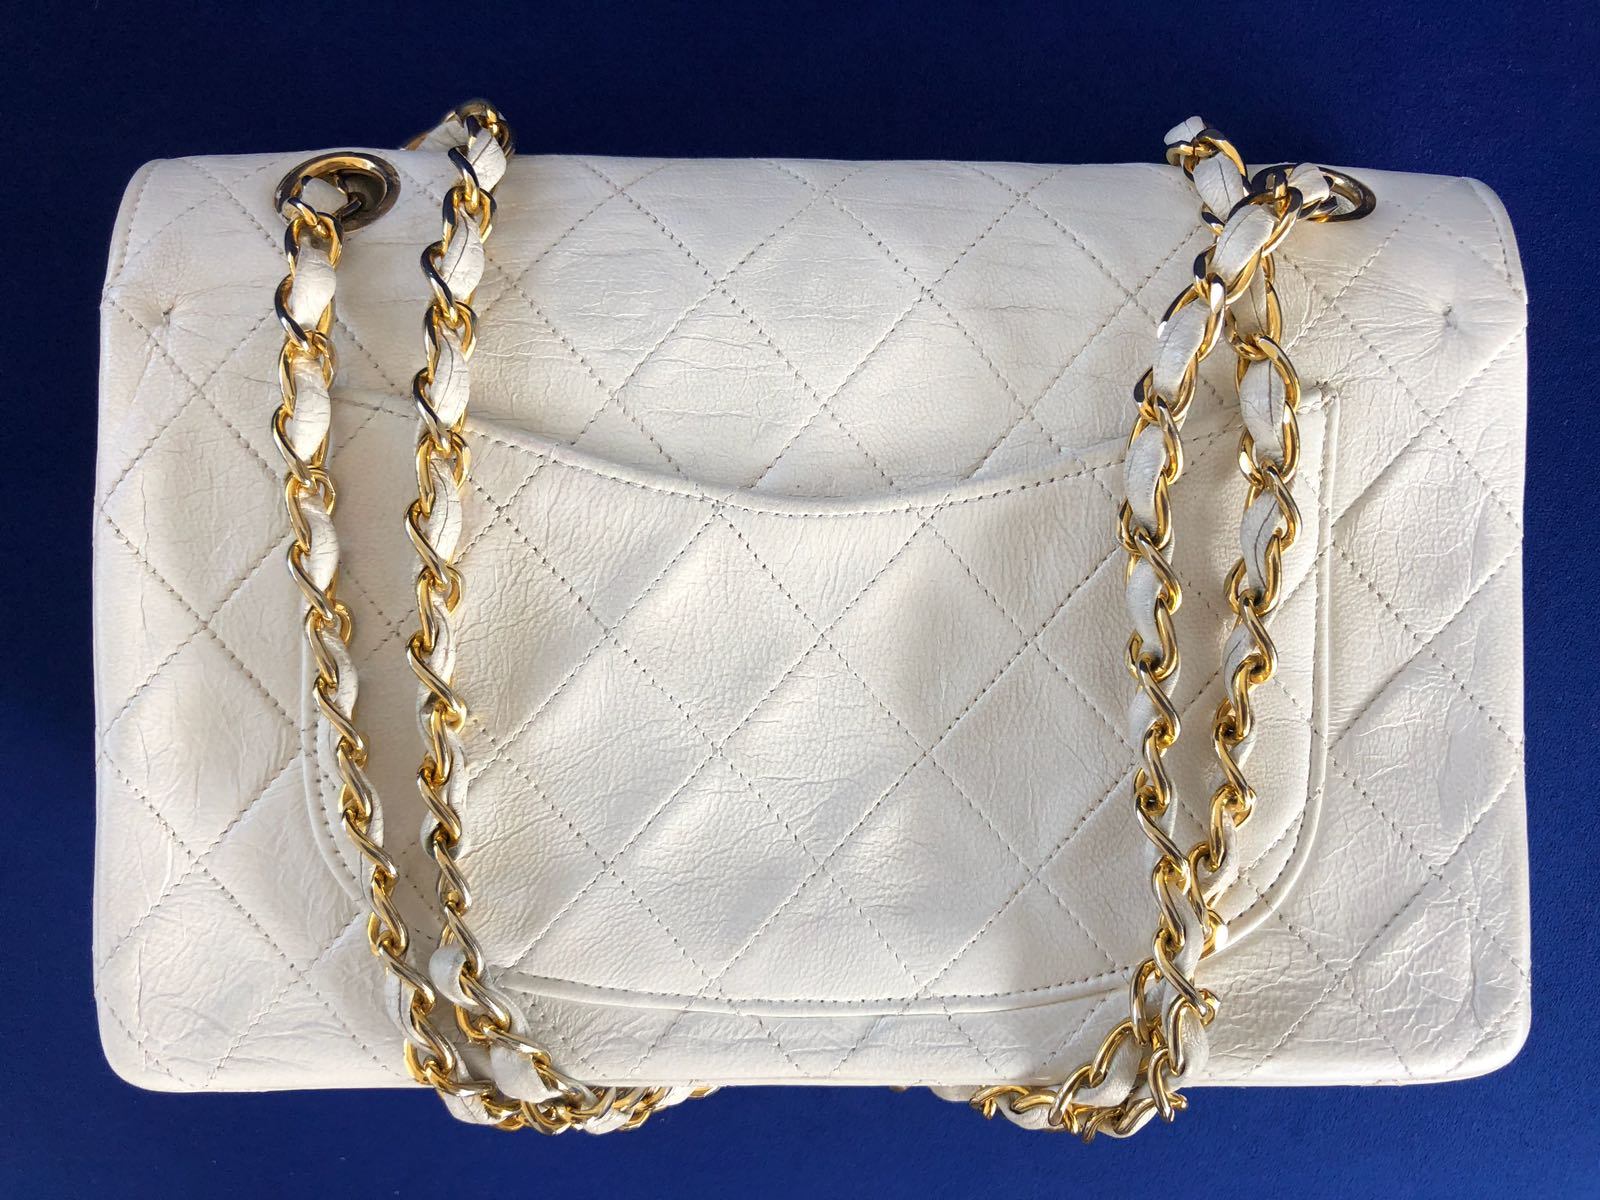 chanel white clutch purse